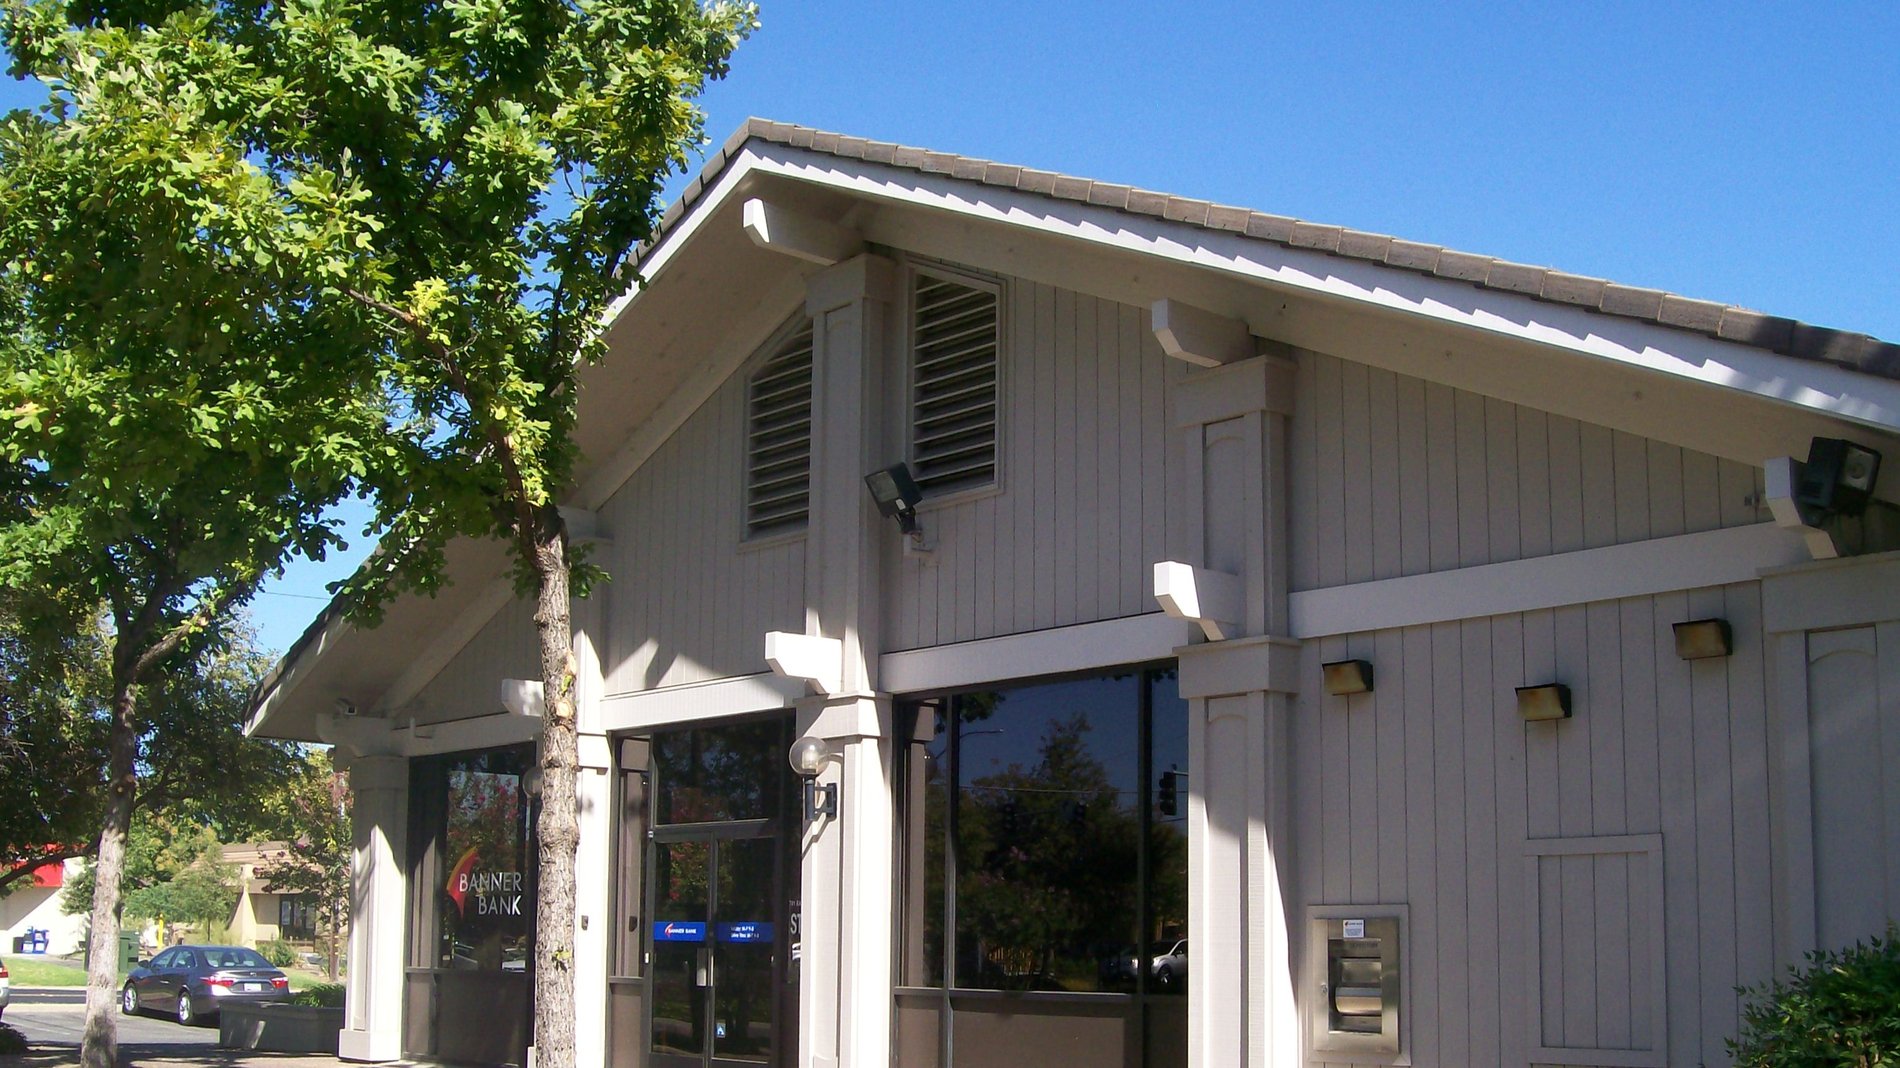 Banner Bank branch in Folsom, CA